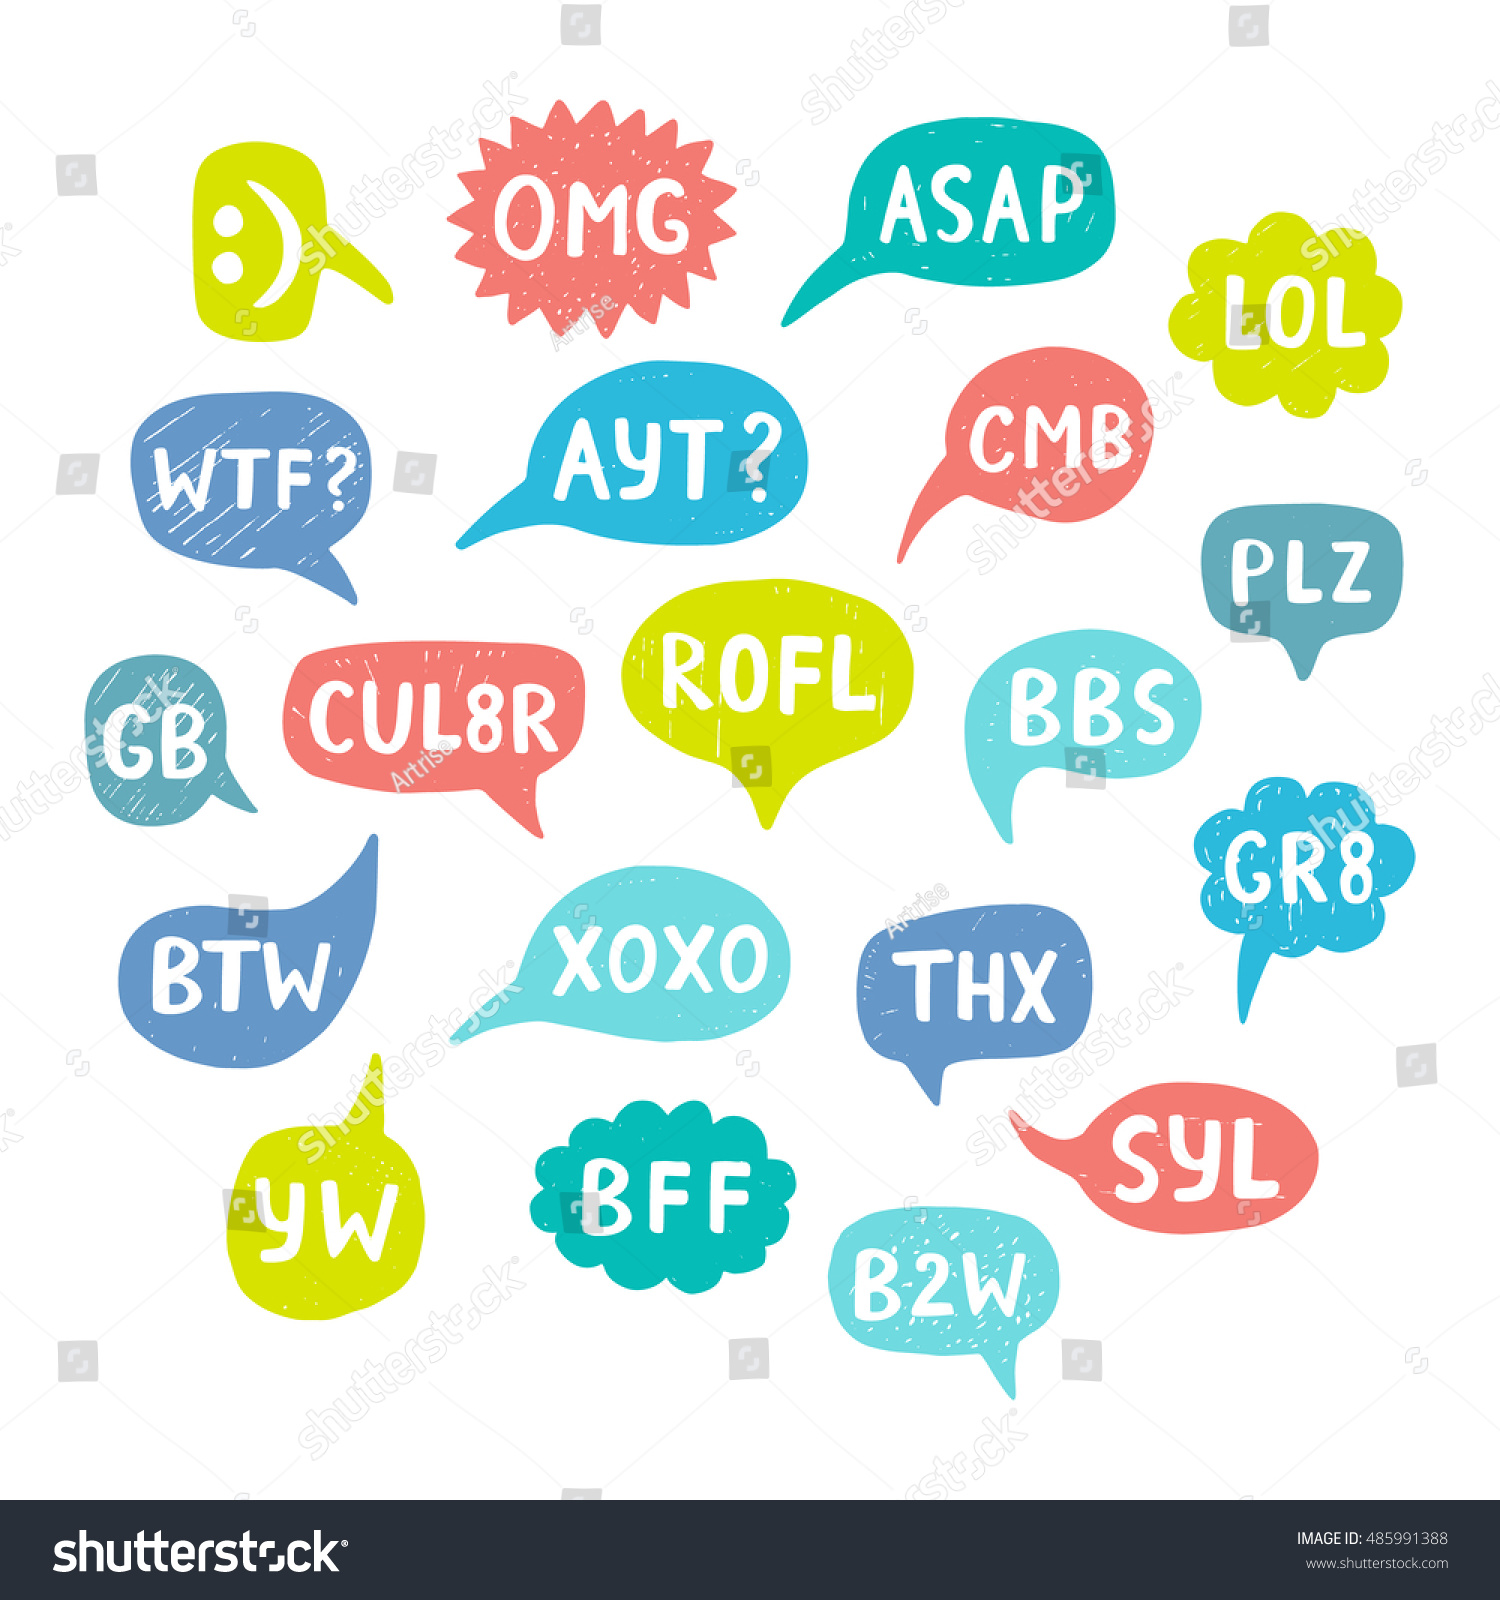 Chat abbreviations